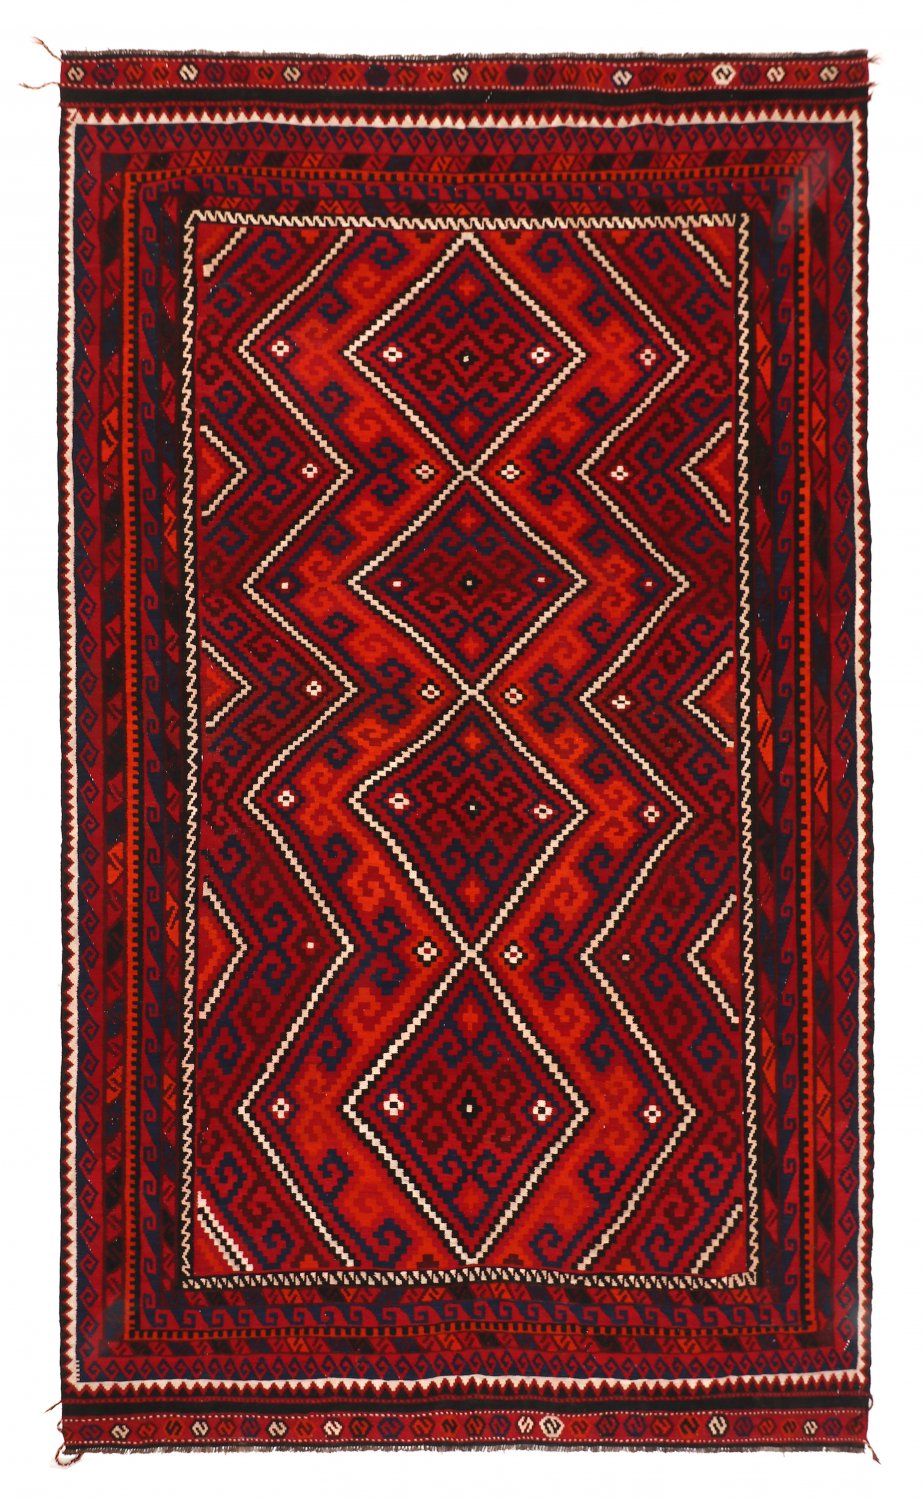 Kilim rug Afghan 425 x 254 cm